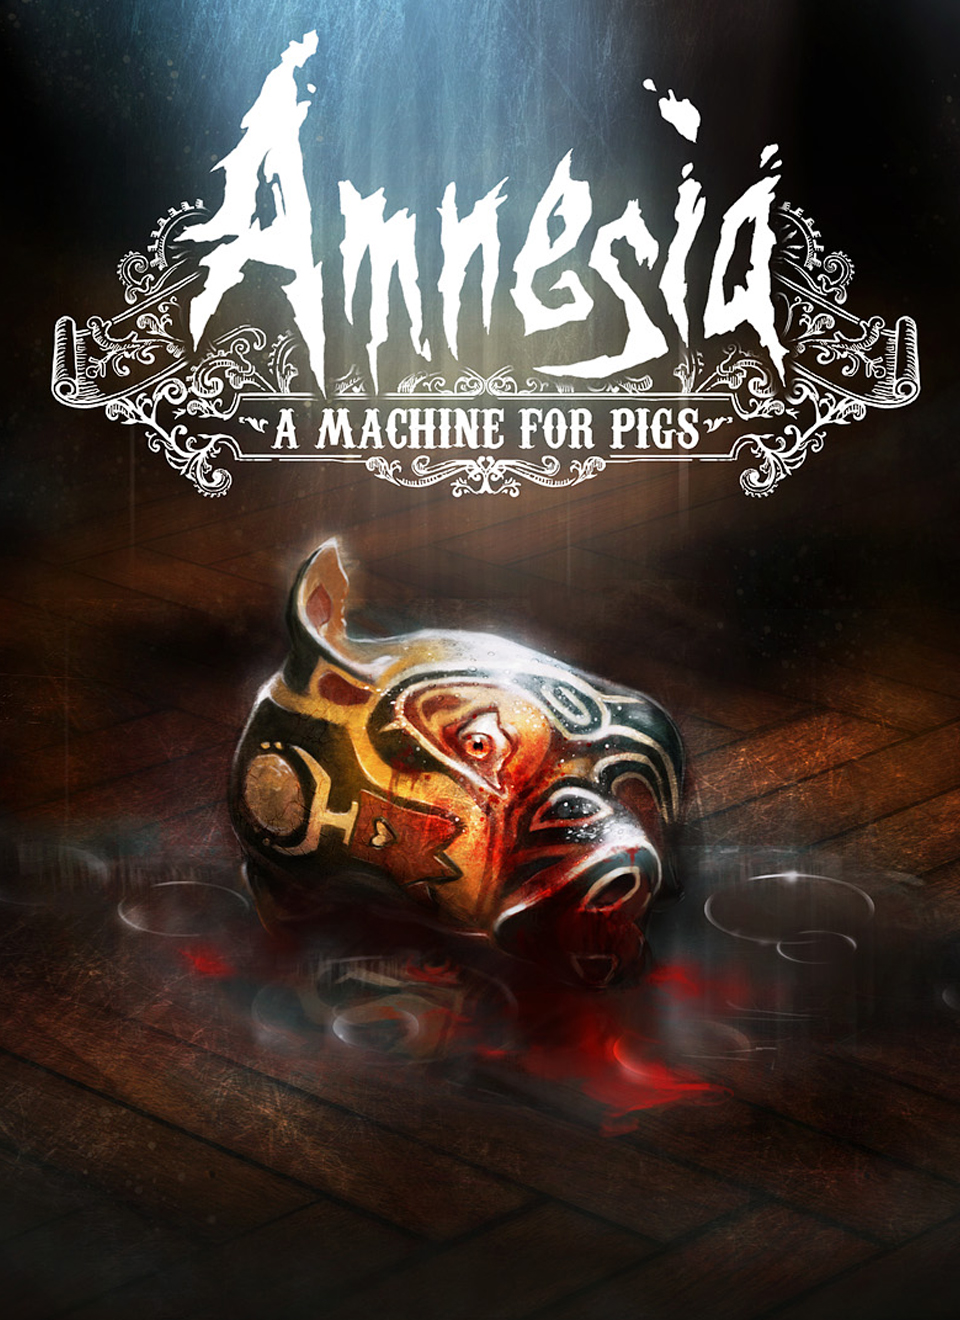 amnesia a machine for pigs steam download